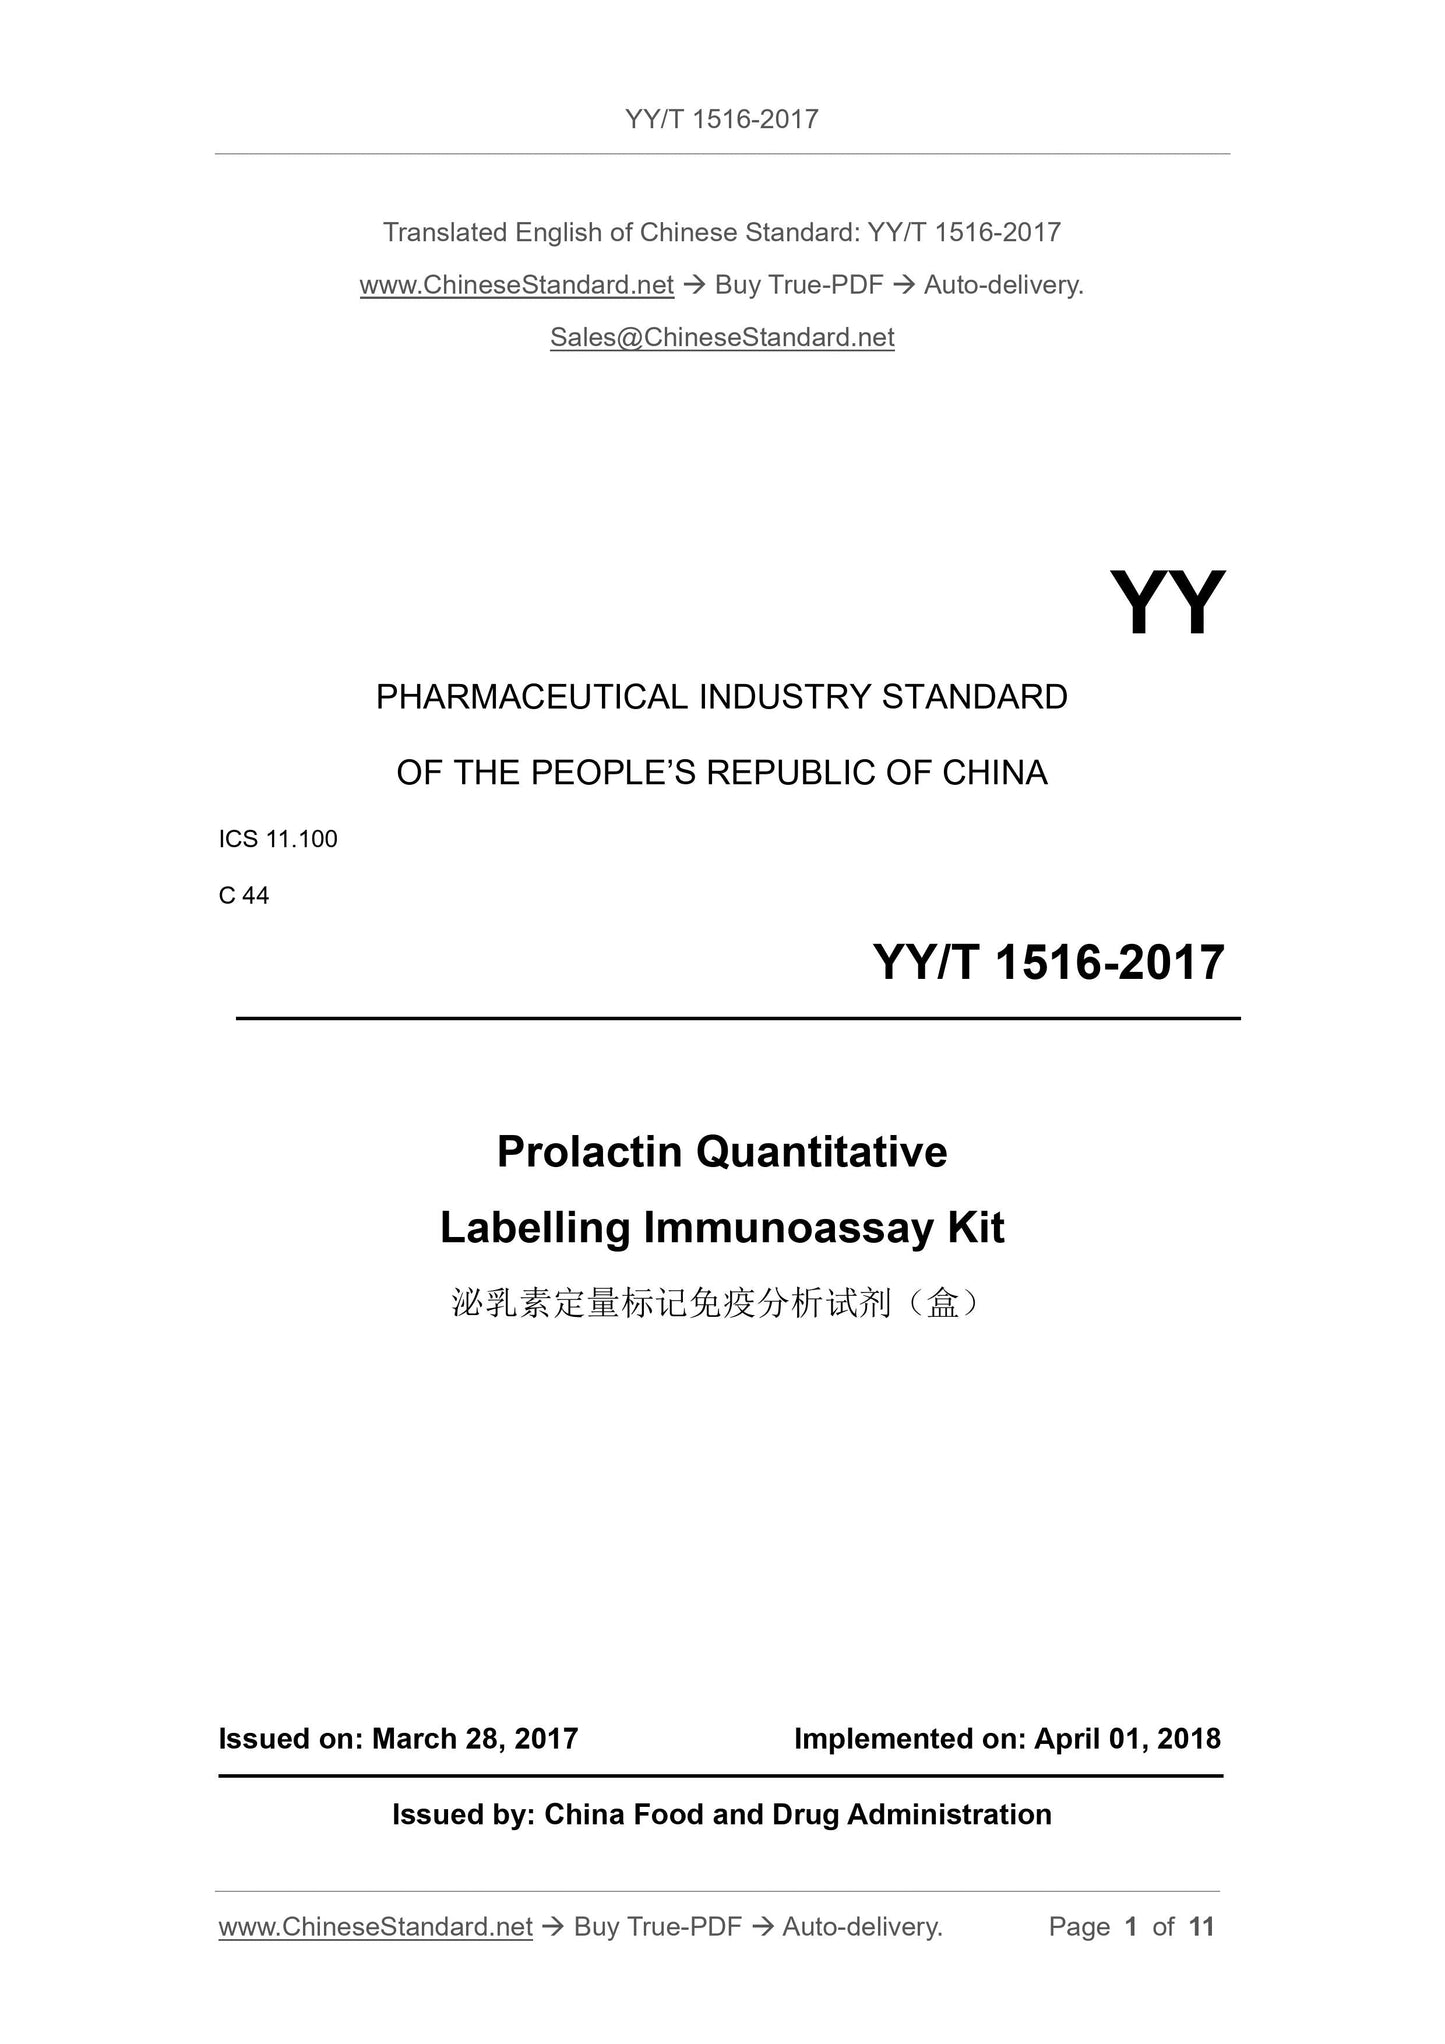 YY/T 1516-2017 Page 1